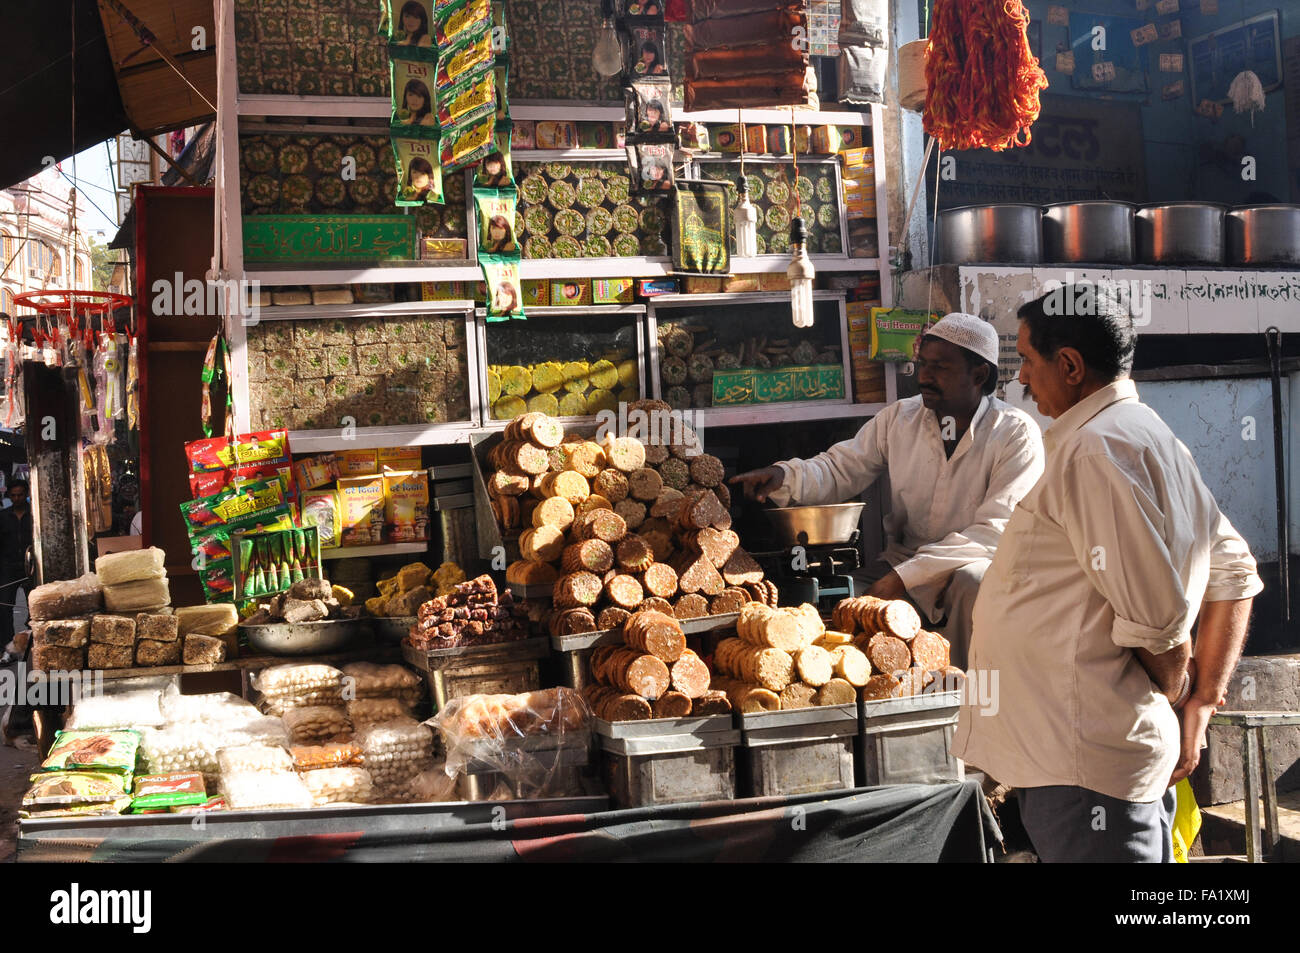 Savouries and sweet shops at shrine market place of Ajmer Sharif Dargah,   Mausoleum of Moinuddin Chishti, an Indian Sufi Saint. Stock Photo